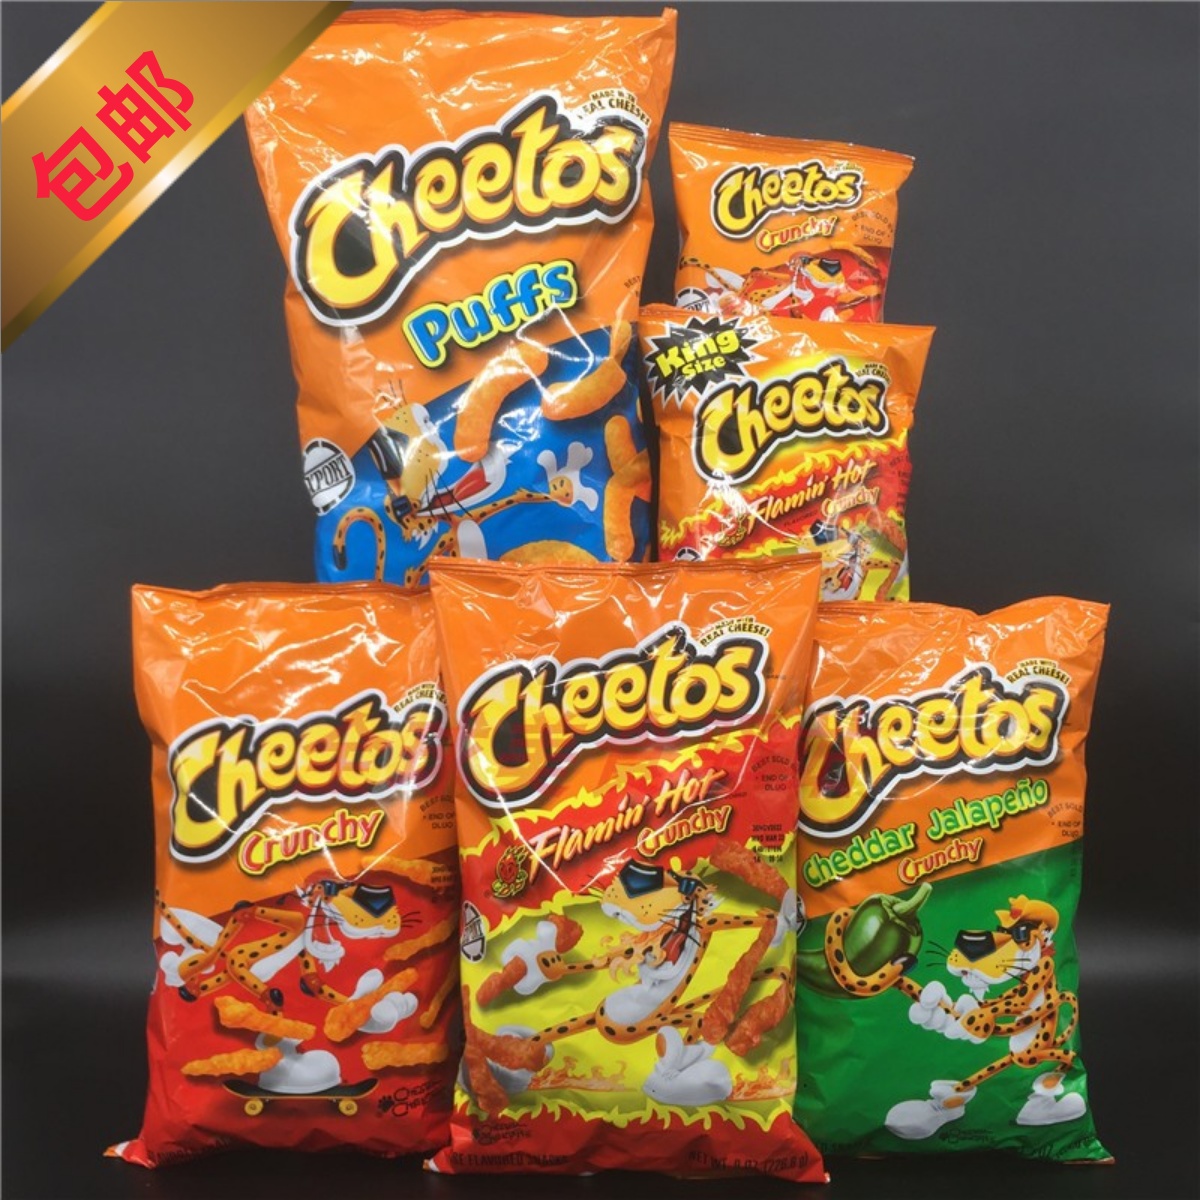 Cheetos Puffs Crunchy美国奇多火辣味芝士味奶酪玉米大